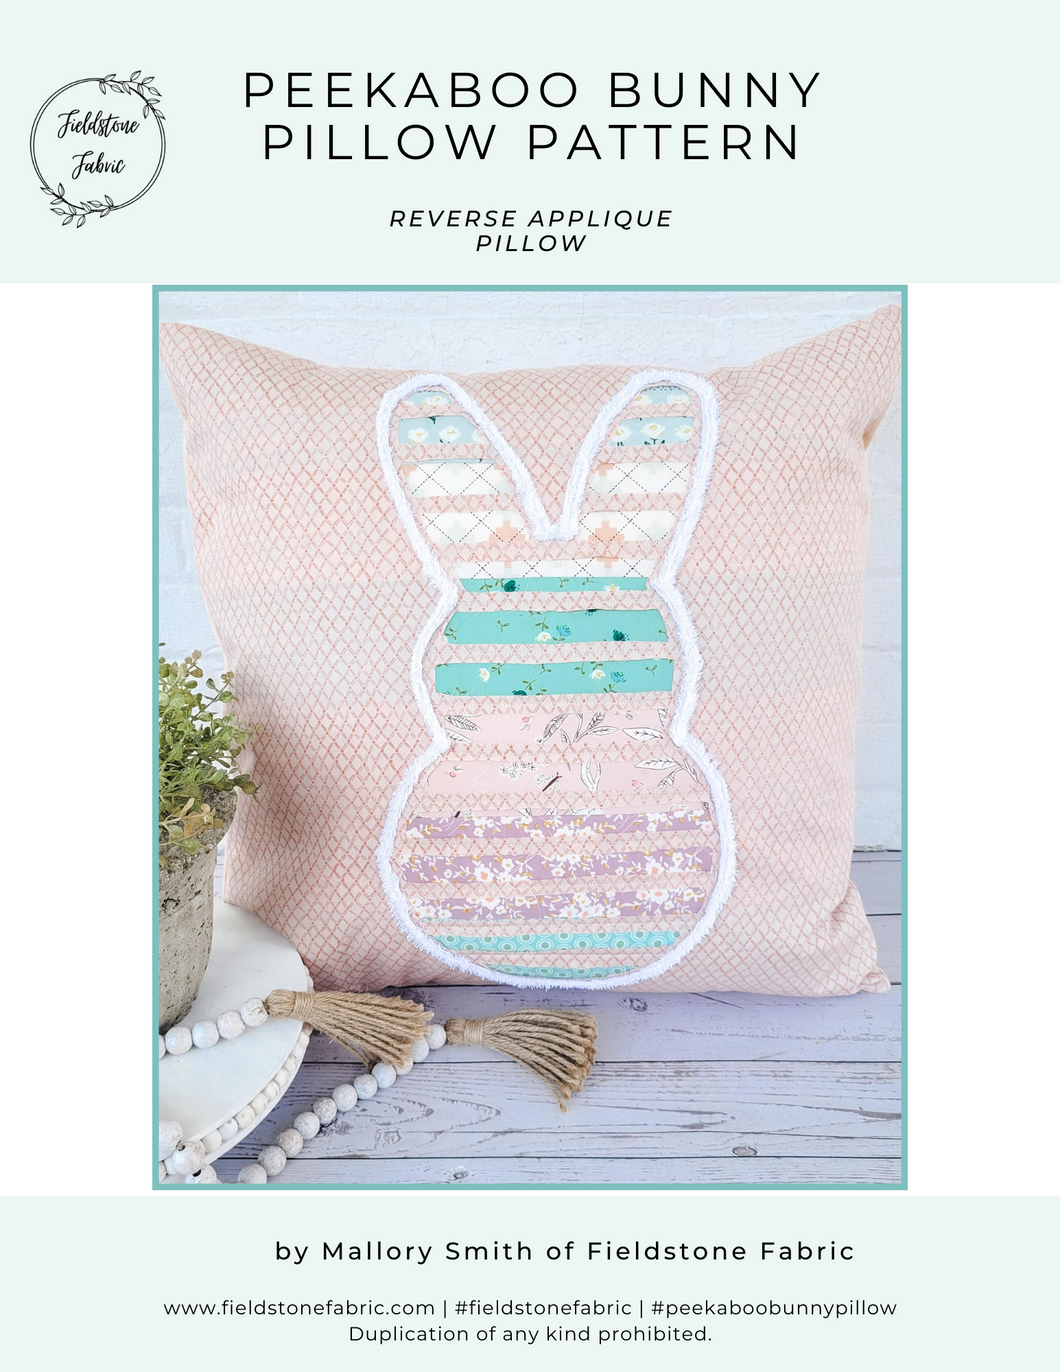 Peekaboo Bunny Pillow Pattern cover